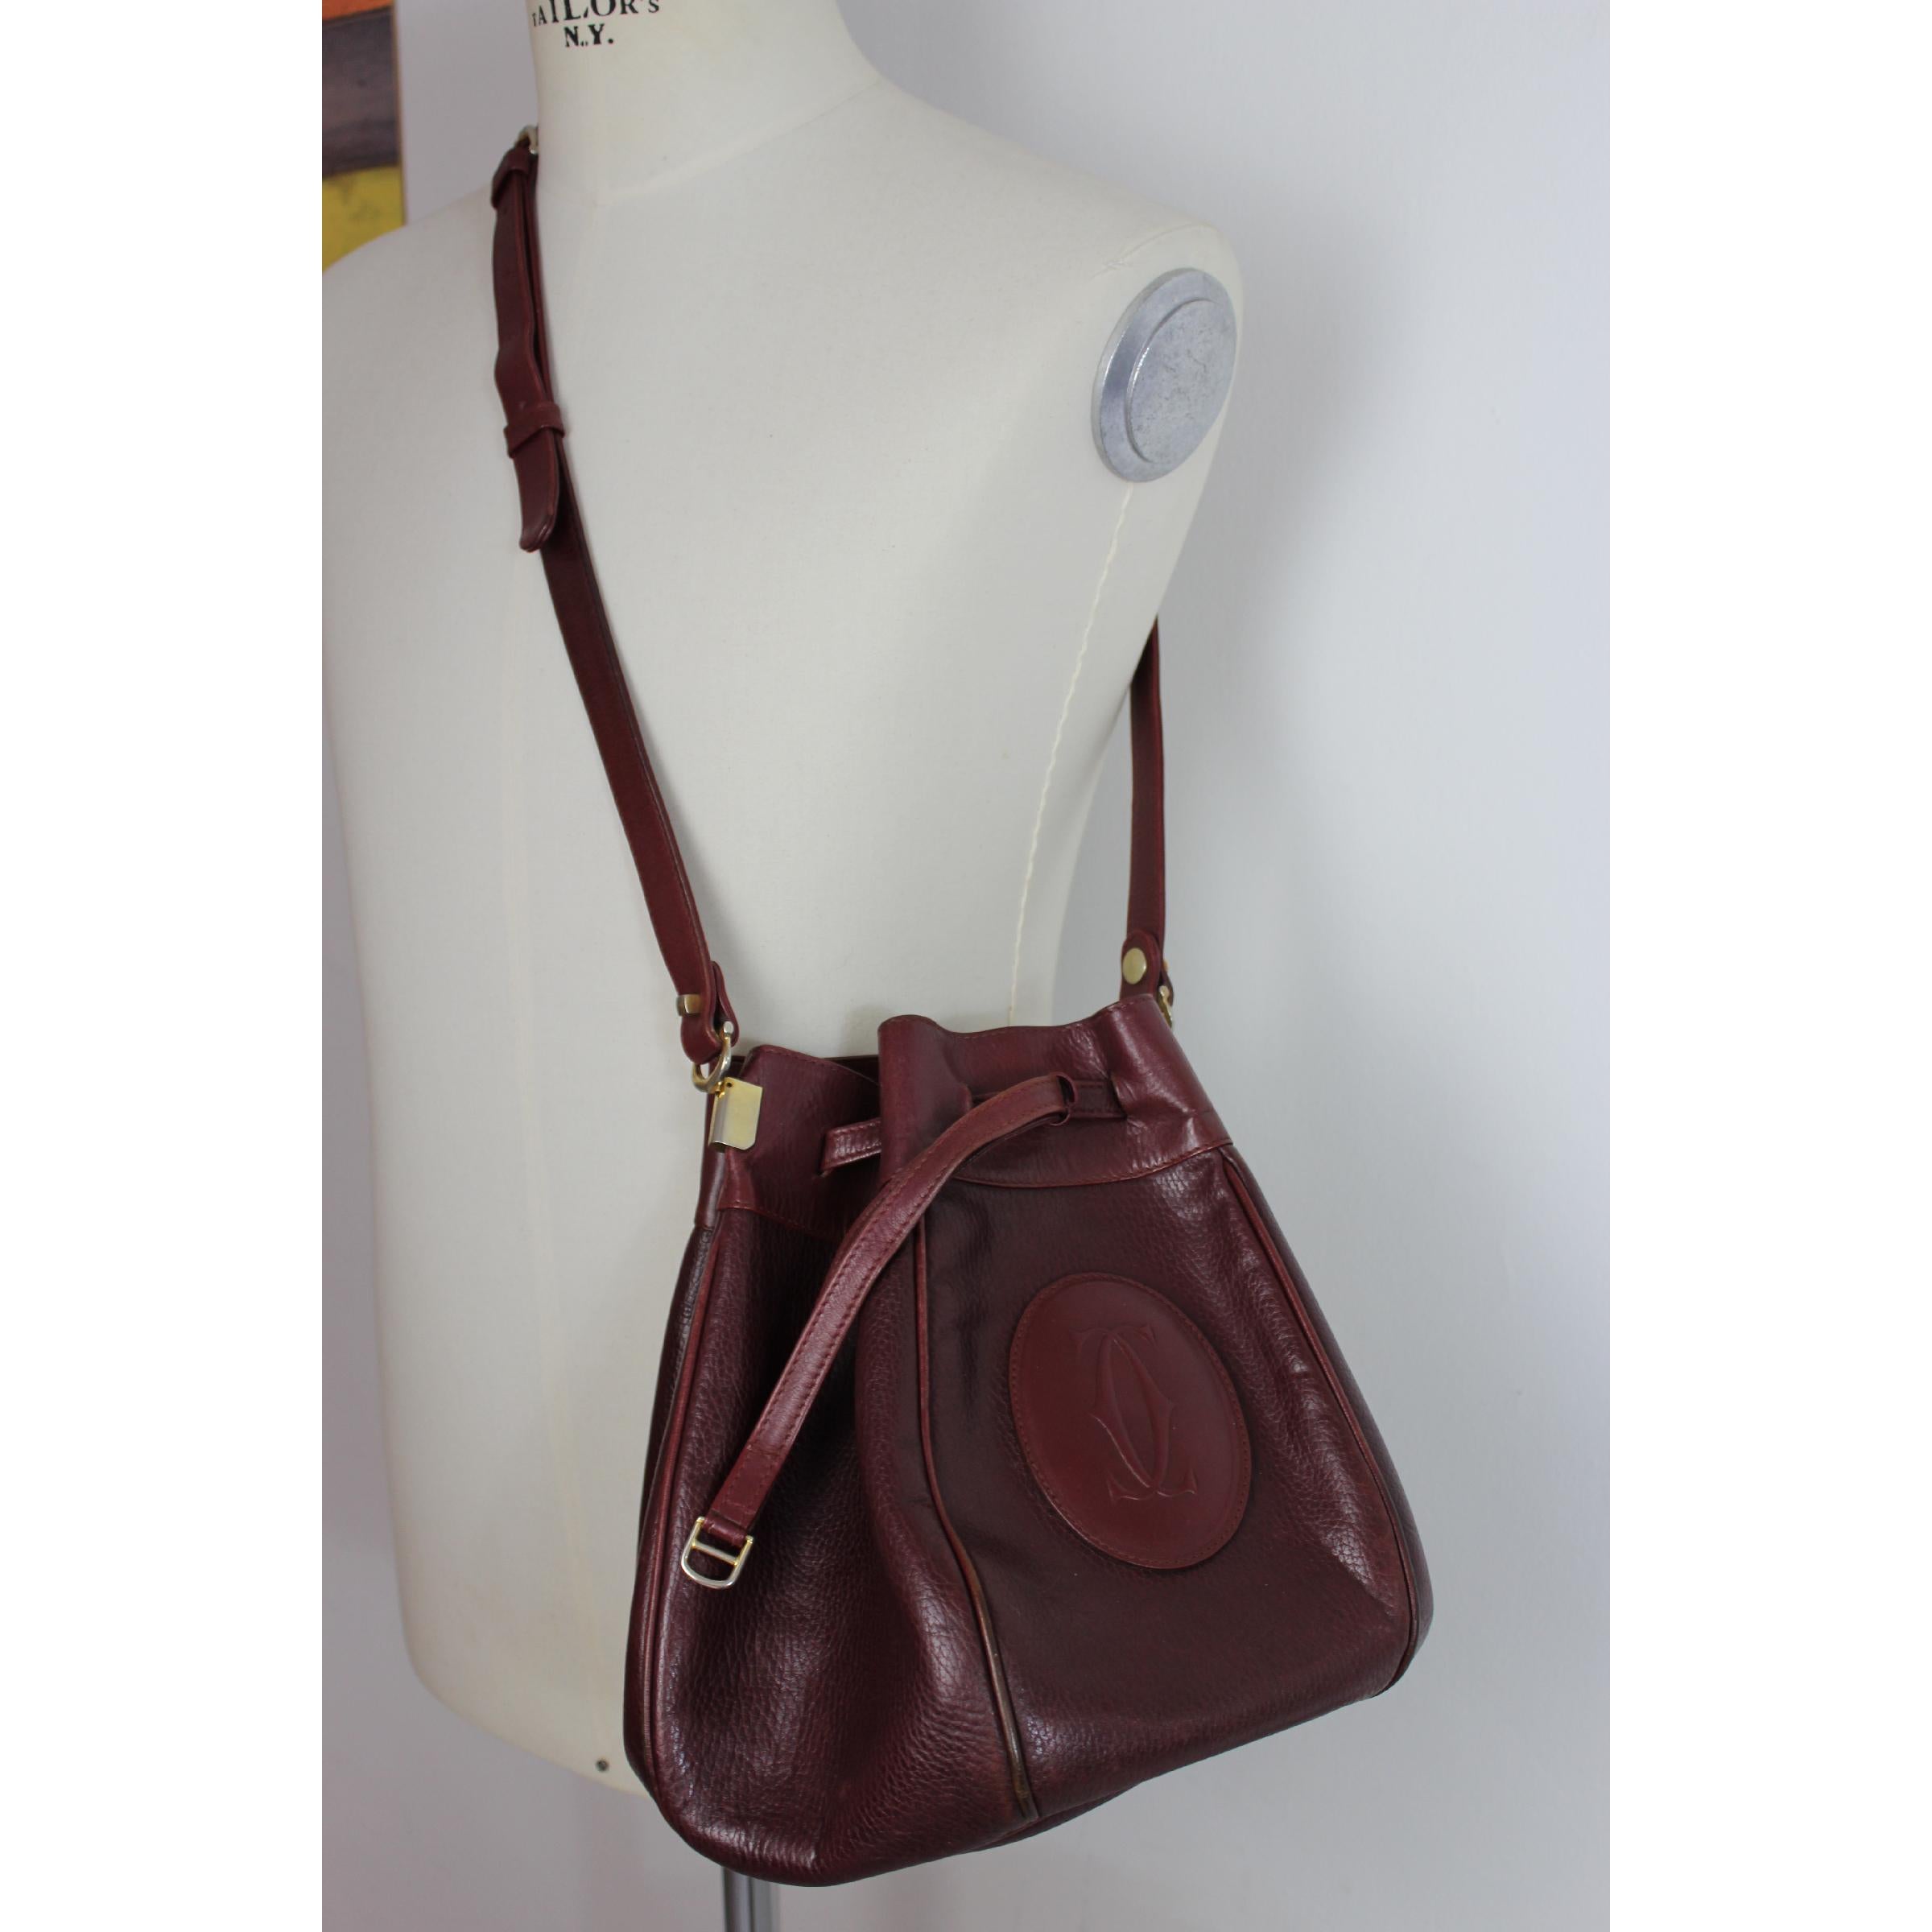 Must De Cartier vintage women's shoulder bag, burgundy color, 100% leather, bucket model, adjustable lace-up closure, internal dividers. 80s. Made in Italy. Excellent vintage condition.

Width: 38 cm
Height: 26 cm
Depth: 22 cm